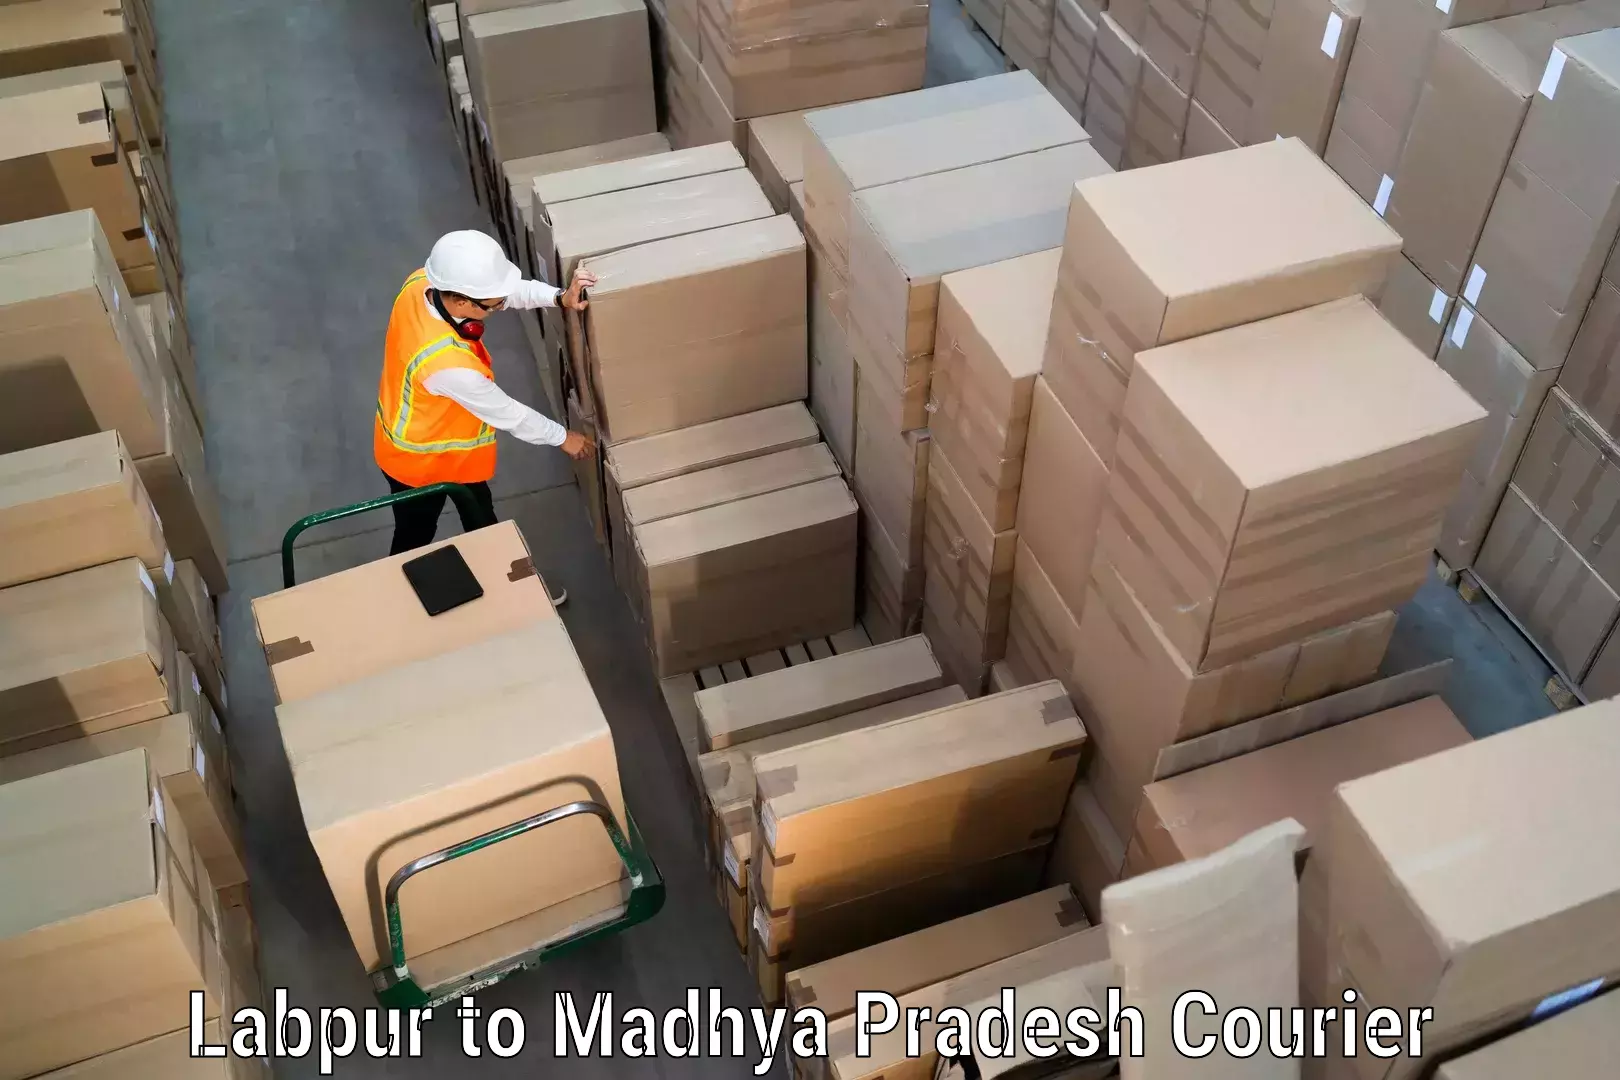 24-hour courier service Labpur to Bina